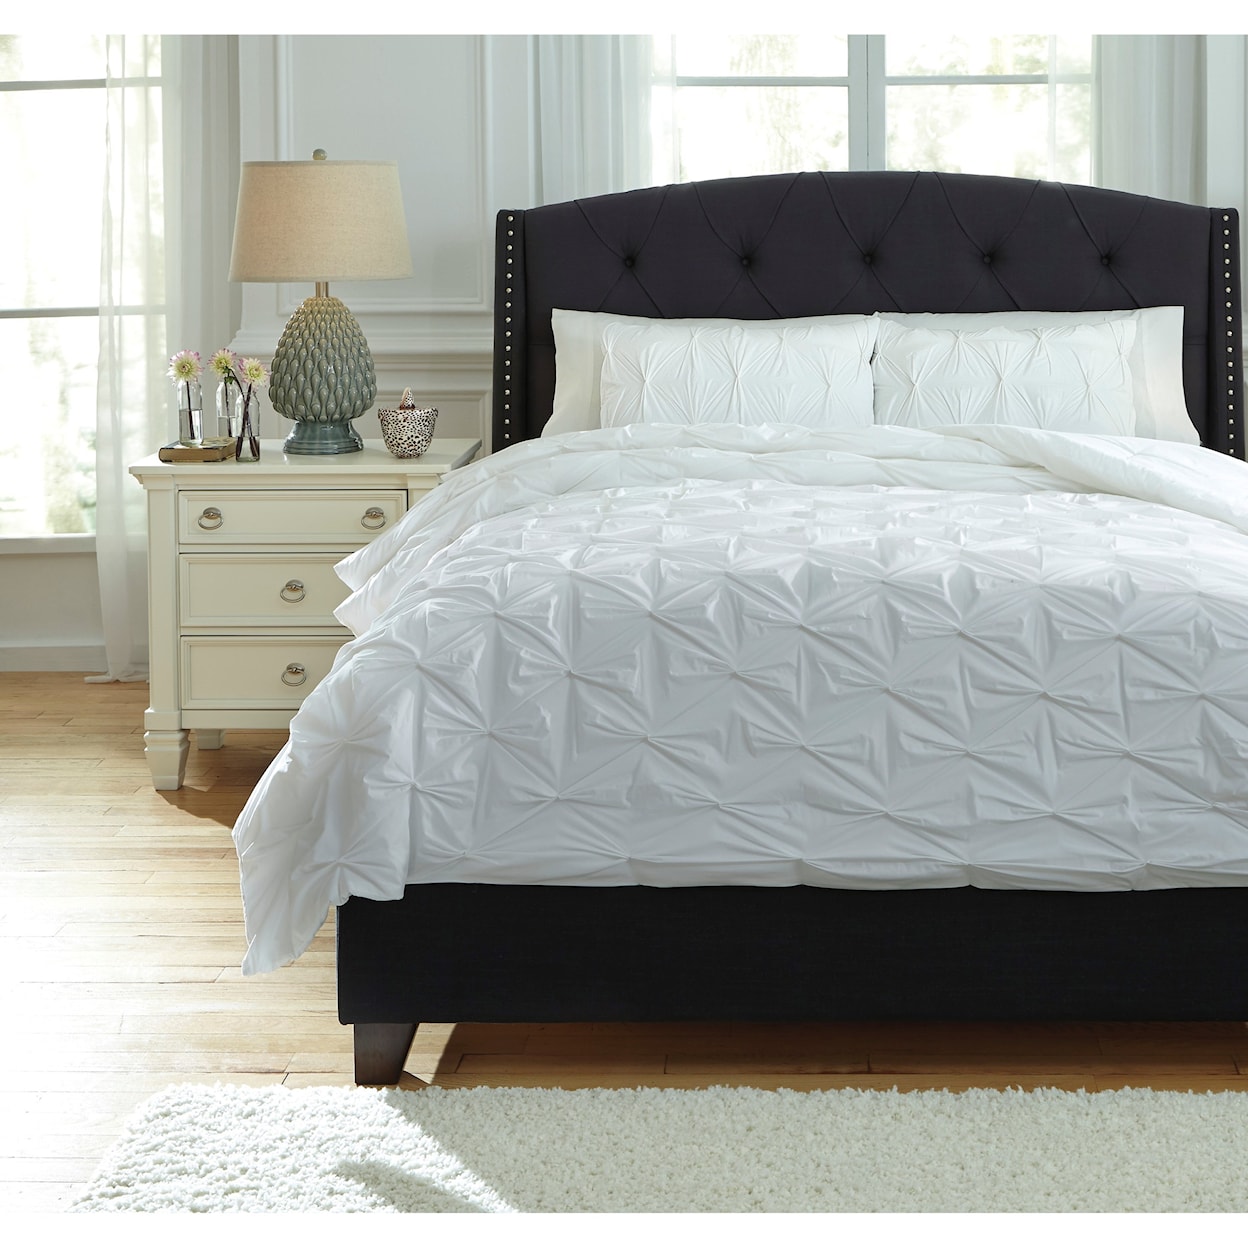 Signature Design by Ashley Furniture Bedding Sets Queen Rimy White Comforter Set